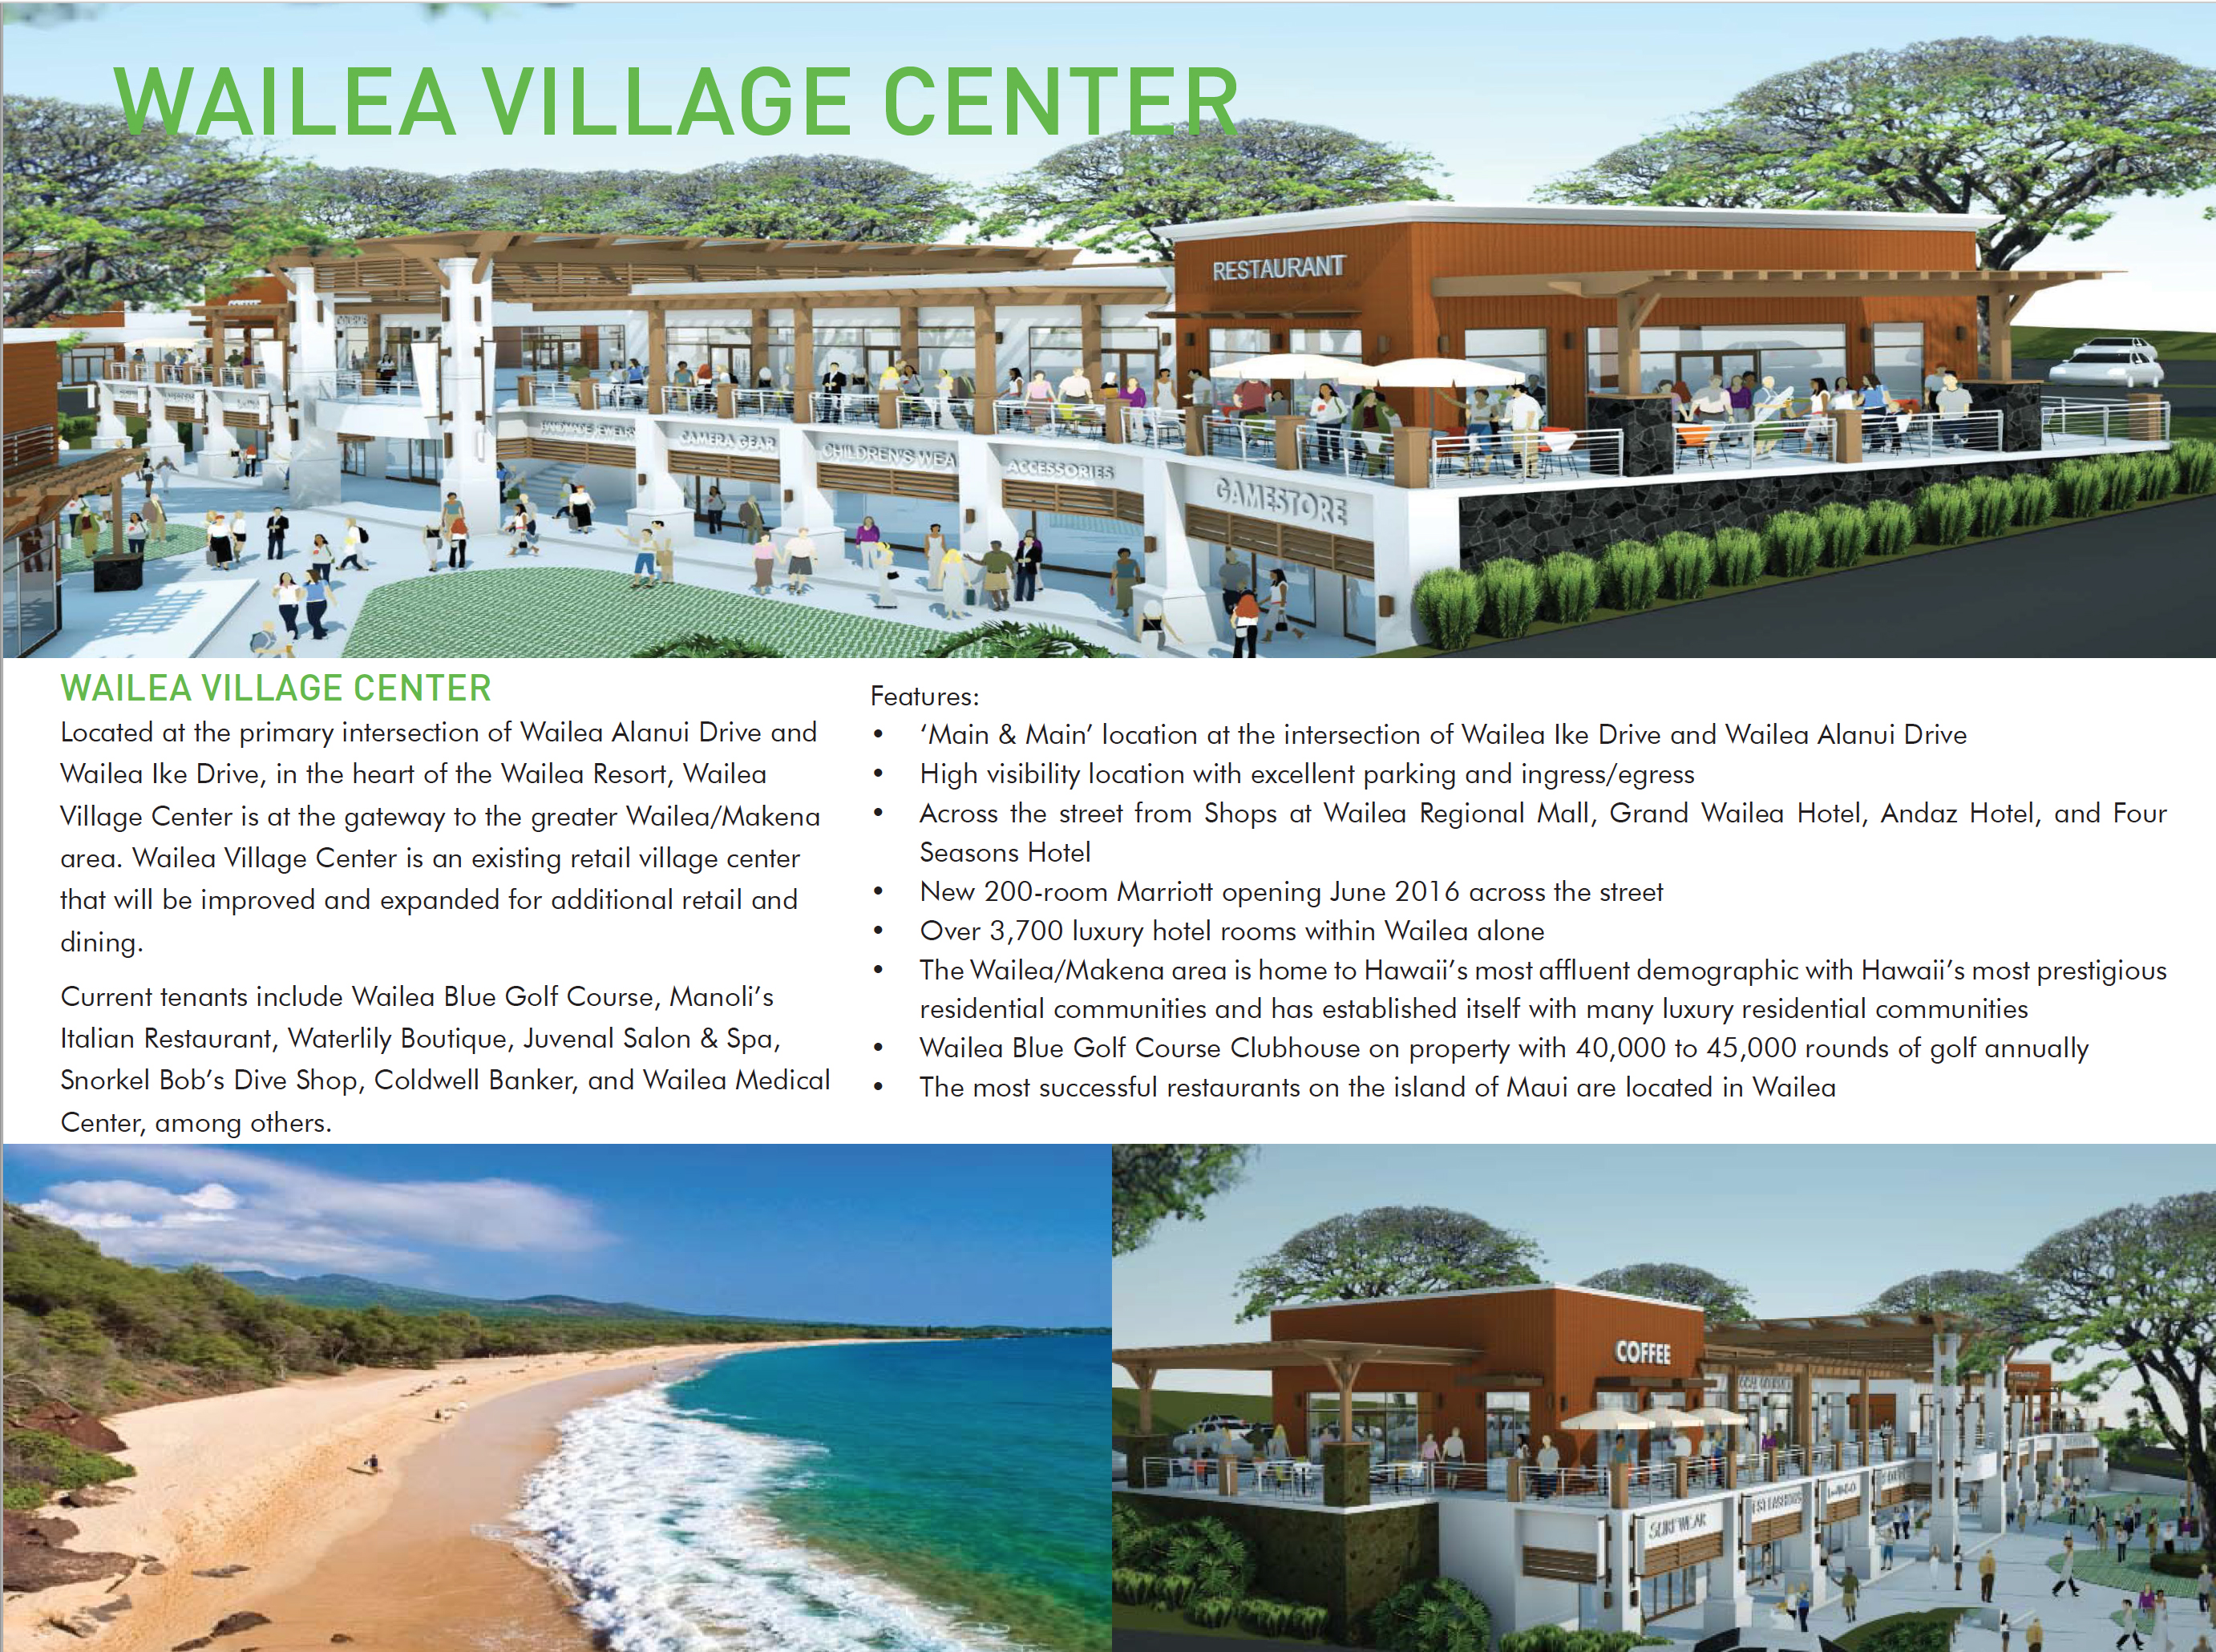 Wailea Village Center